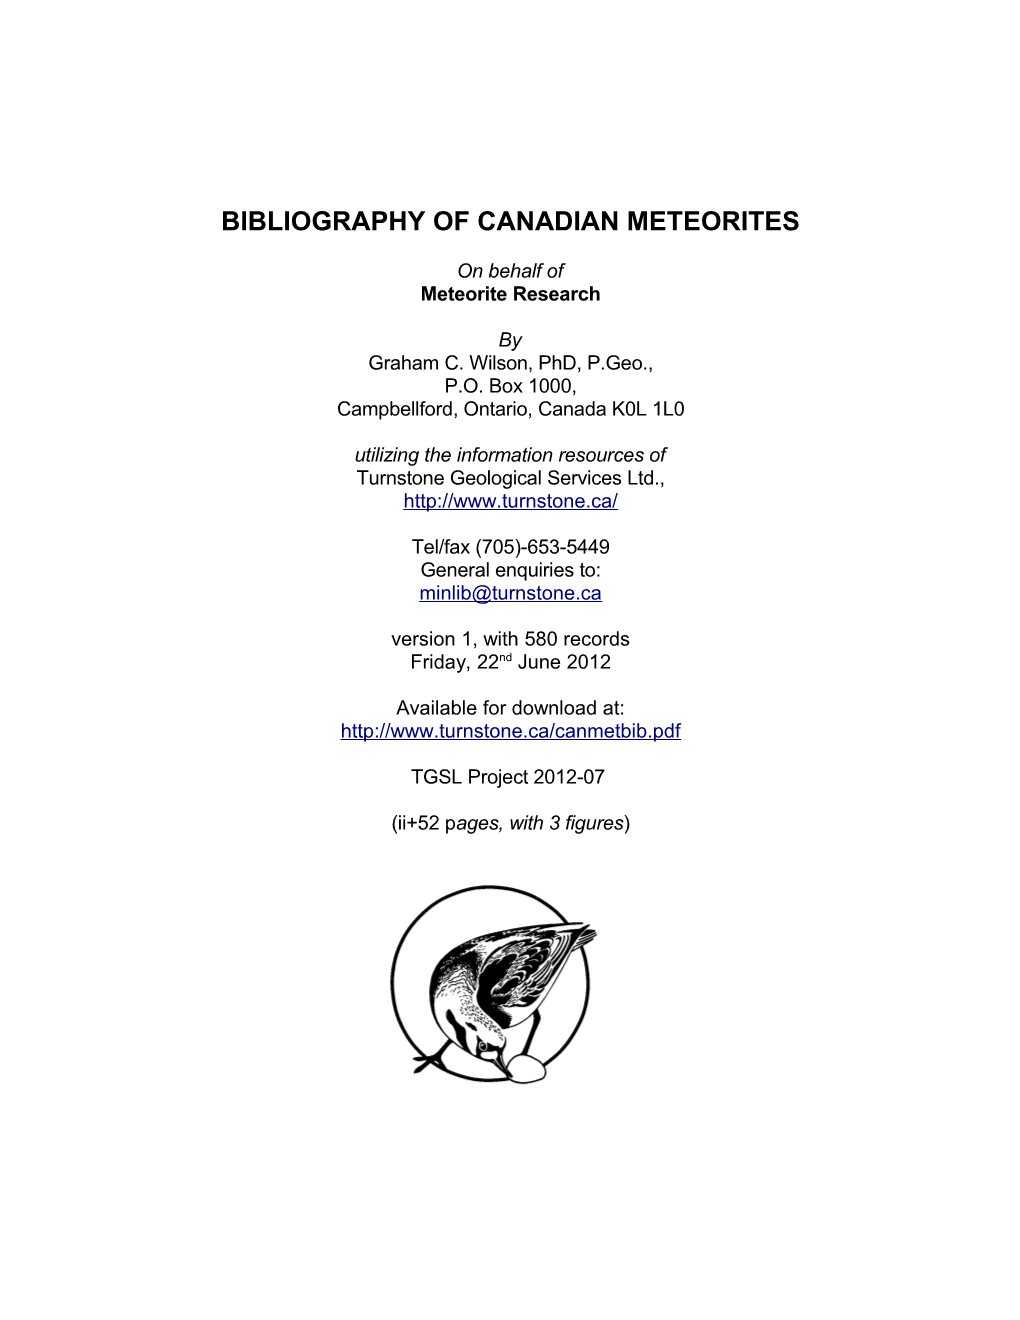 Bibliography of Canadian Meteorites